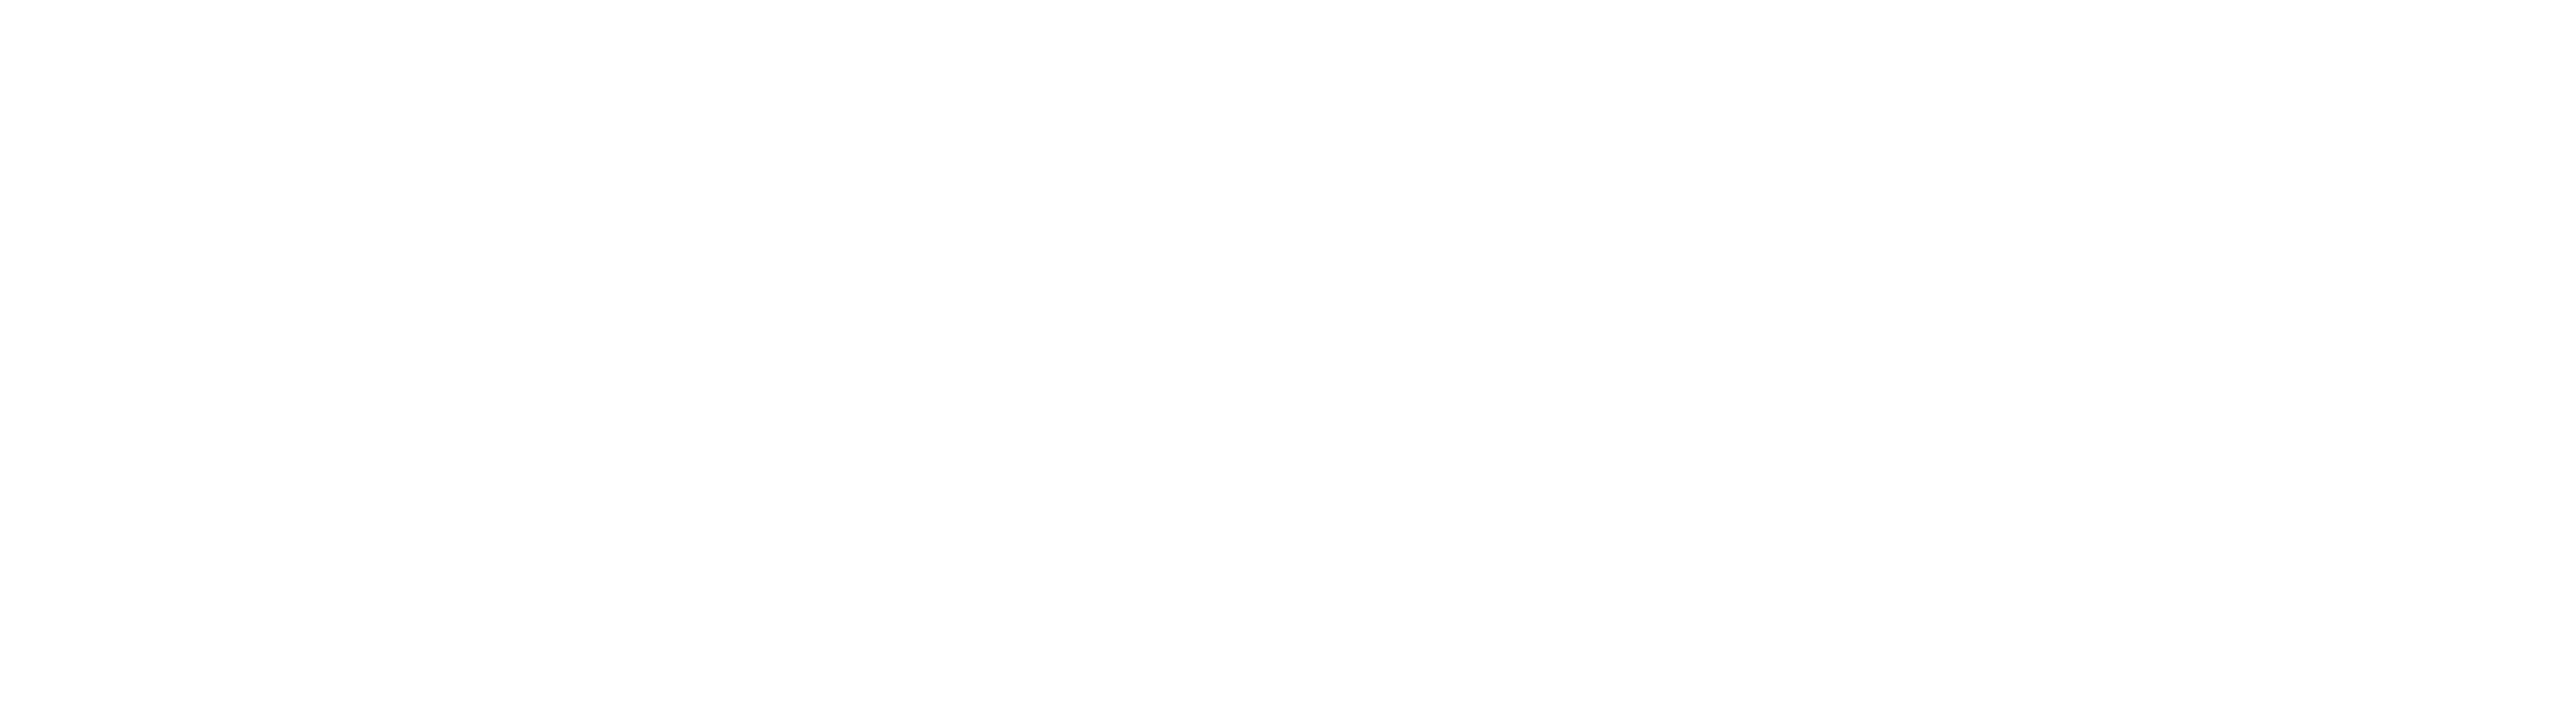 Sudar logo white p